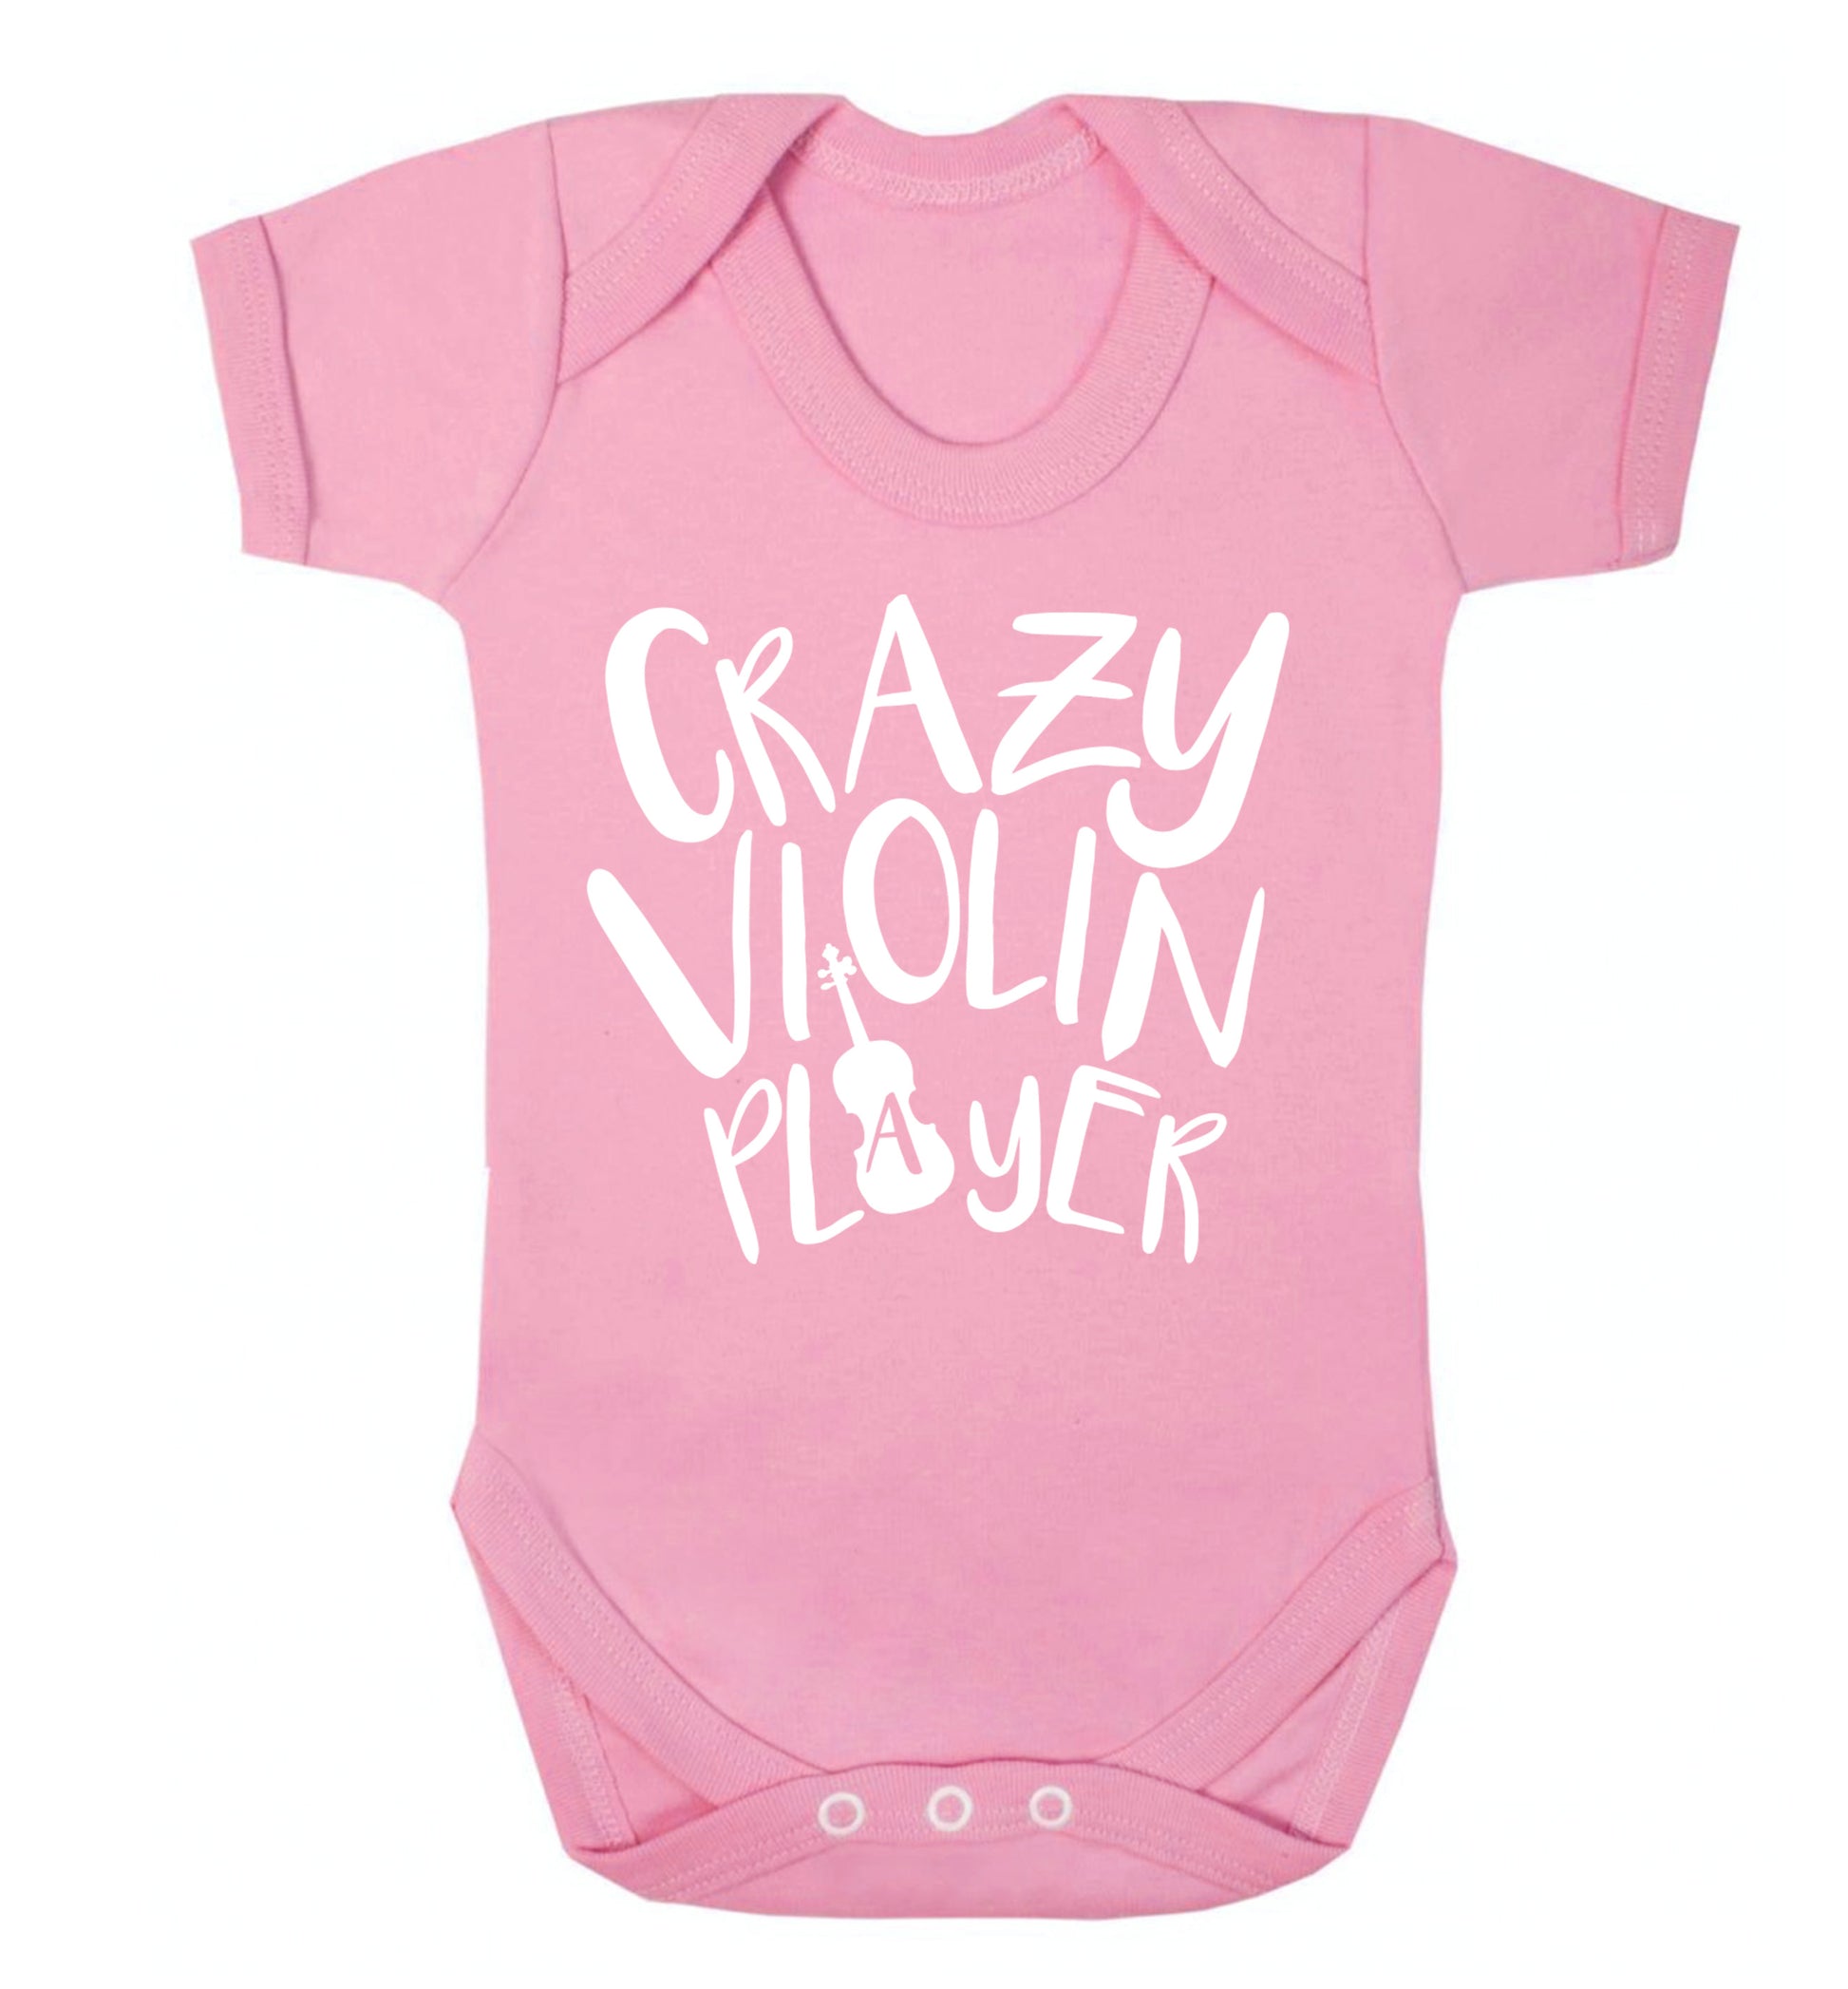 Crazy Violin Player Baby Vest pale pink 18-24 months